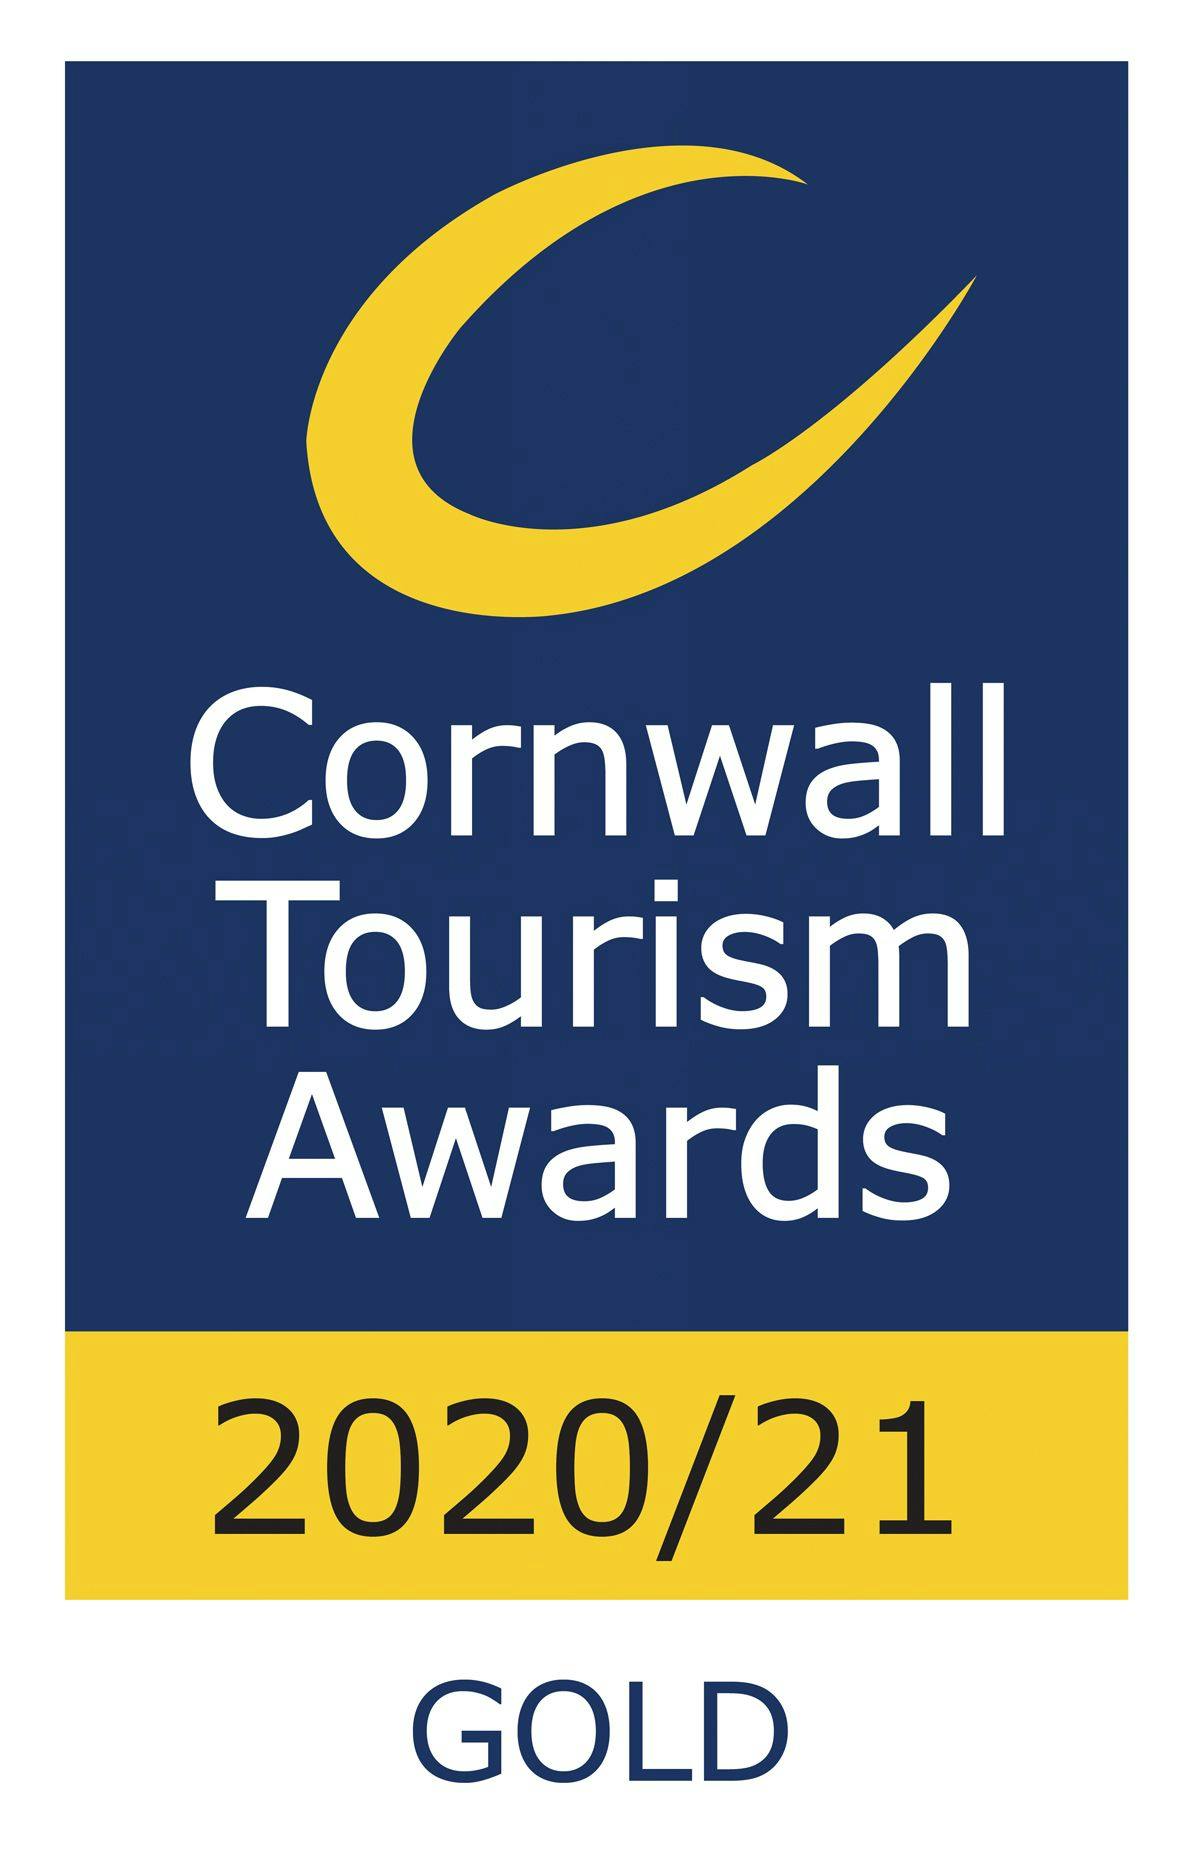 Cornish Tourism Awards Gold 2020/21